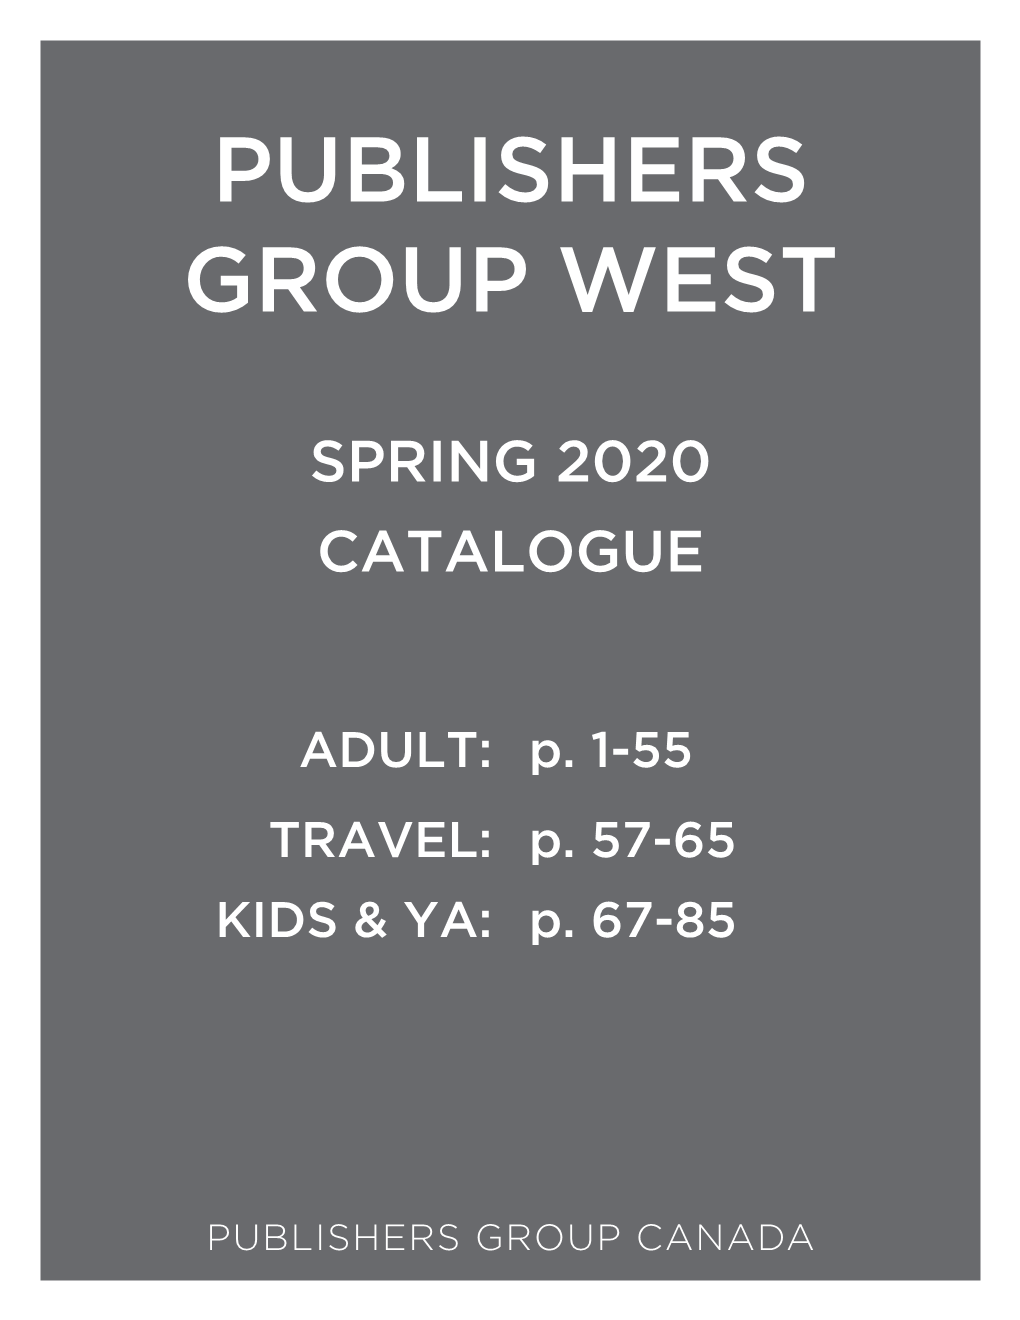 Publishers Group West